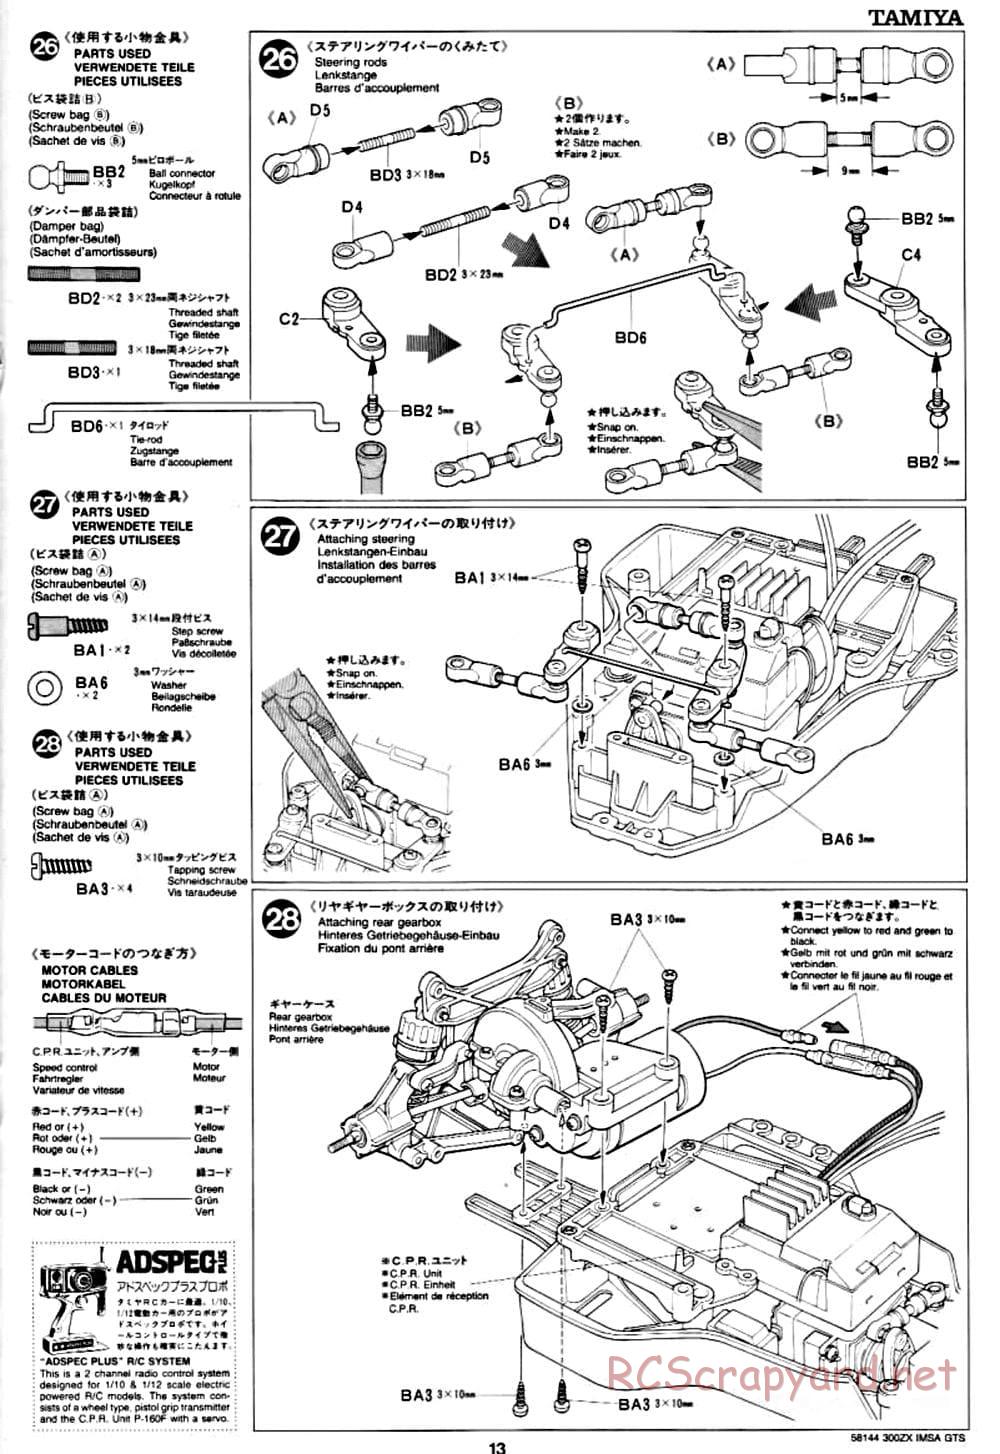 Tamiya - Nissan 300ZX IMSA-GTS - TA-02W Chassis - Manual - Page 13